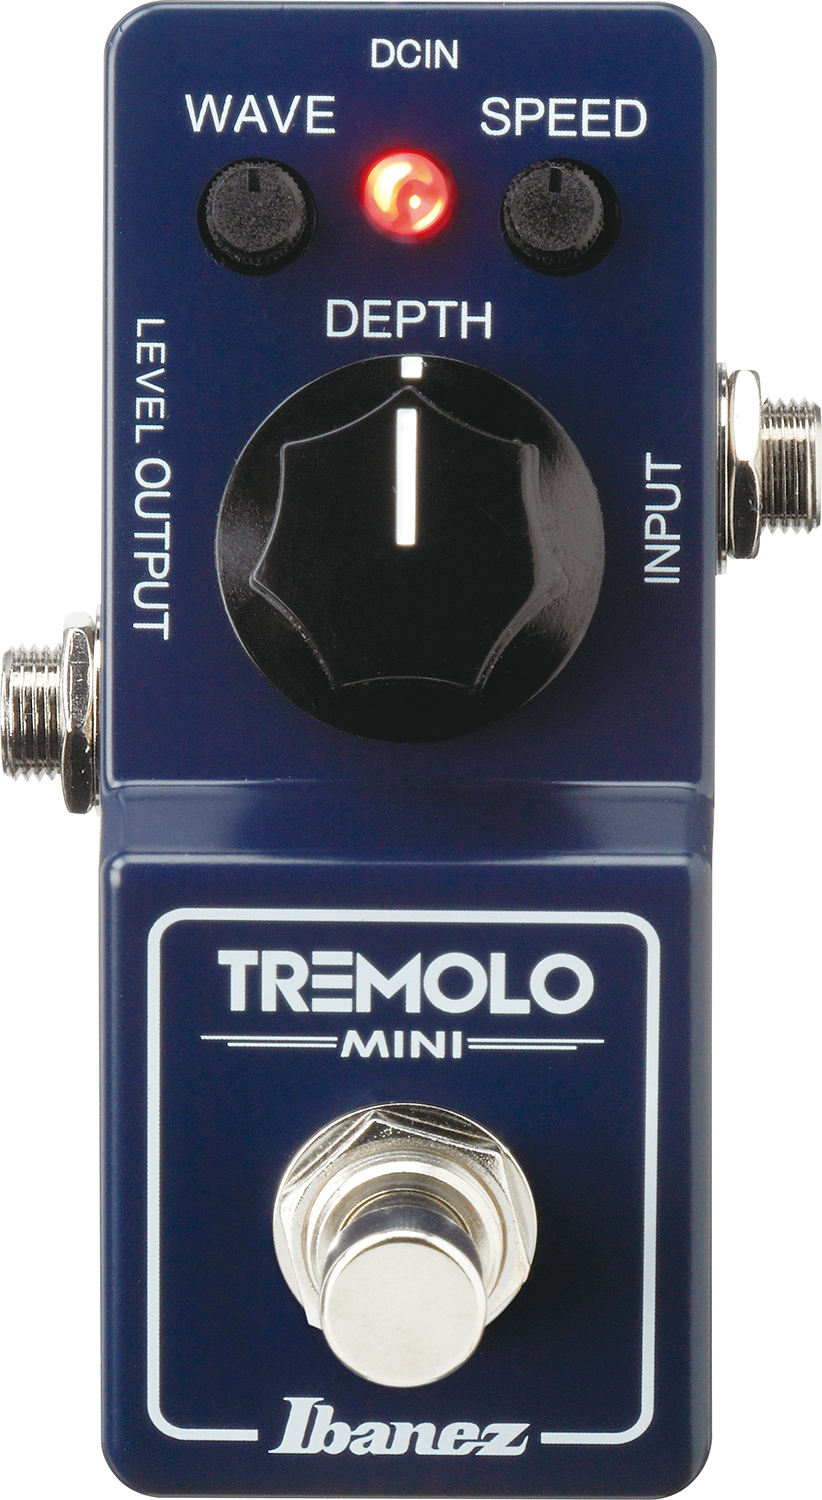 Køb Ibanez TRMINI Tremolo Mini Guitar Pedal - Pris 819.00 kr.